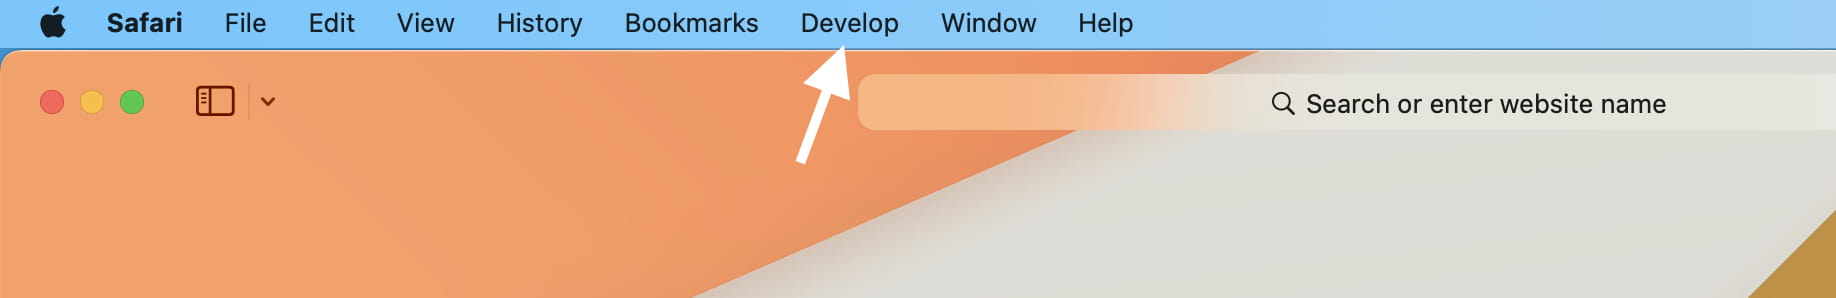 Develop option in Safari menu bar on Mac